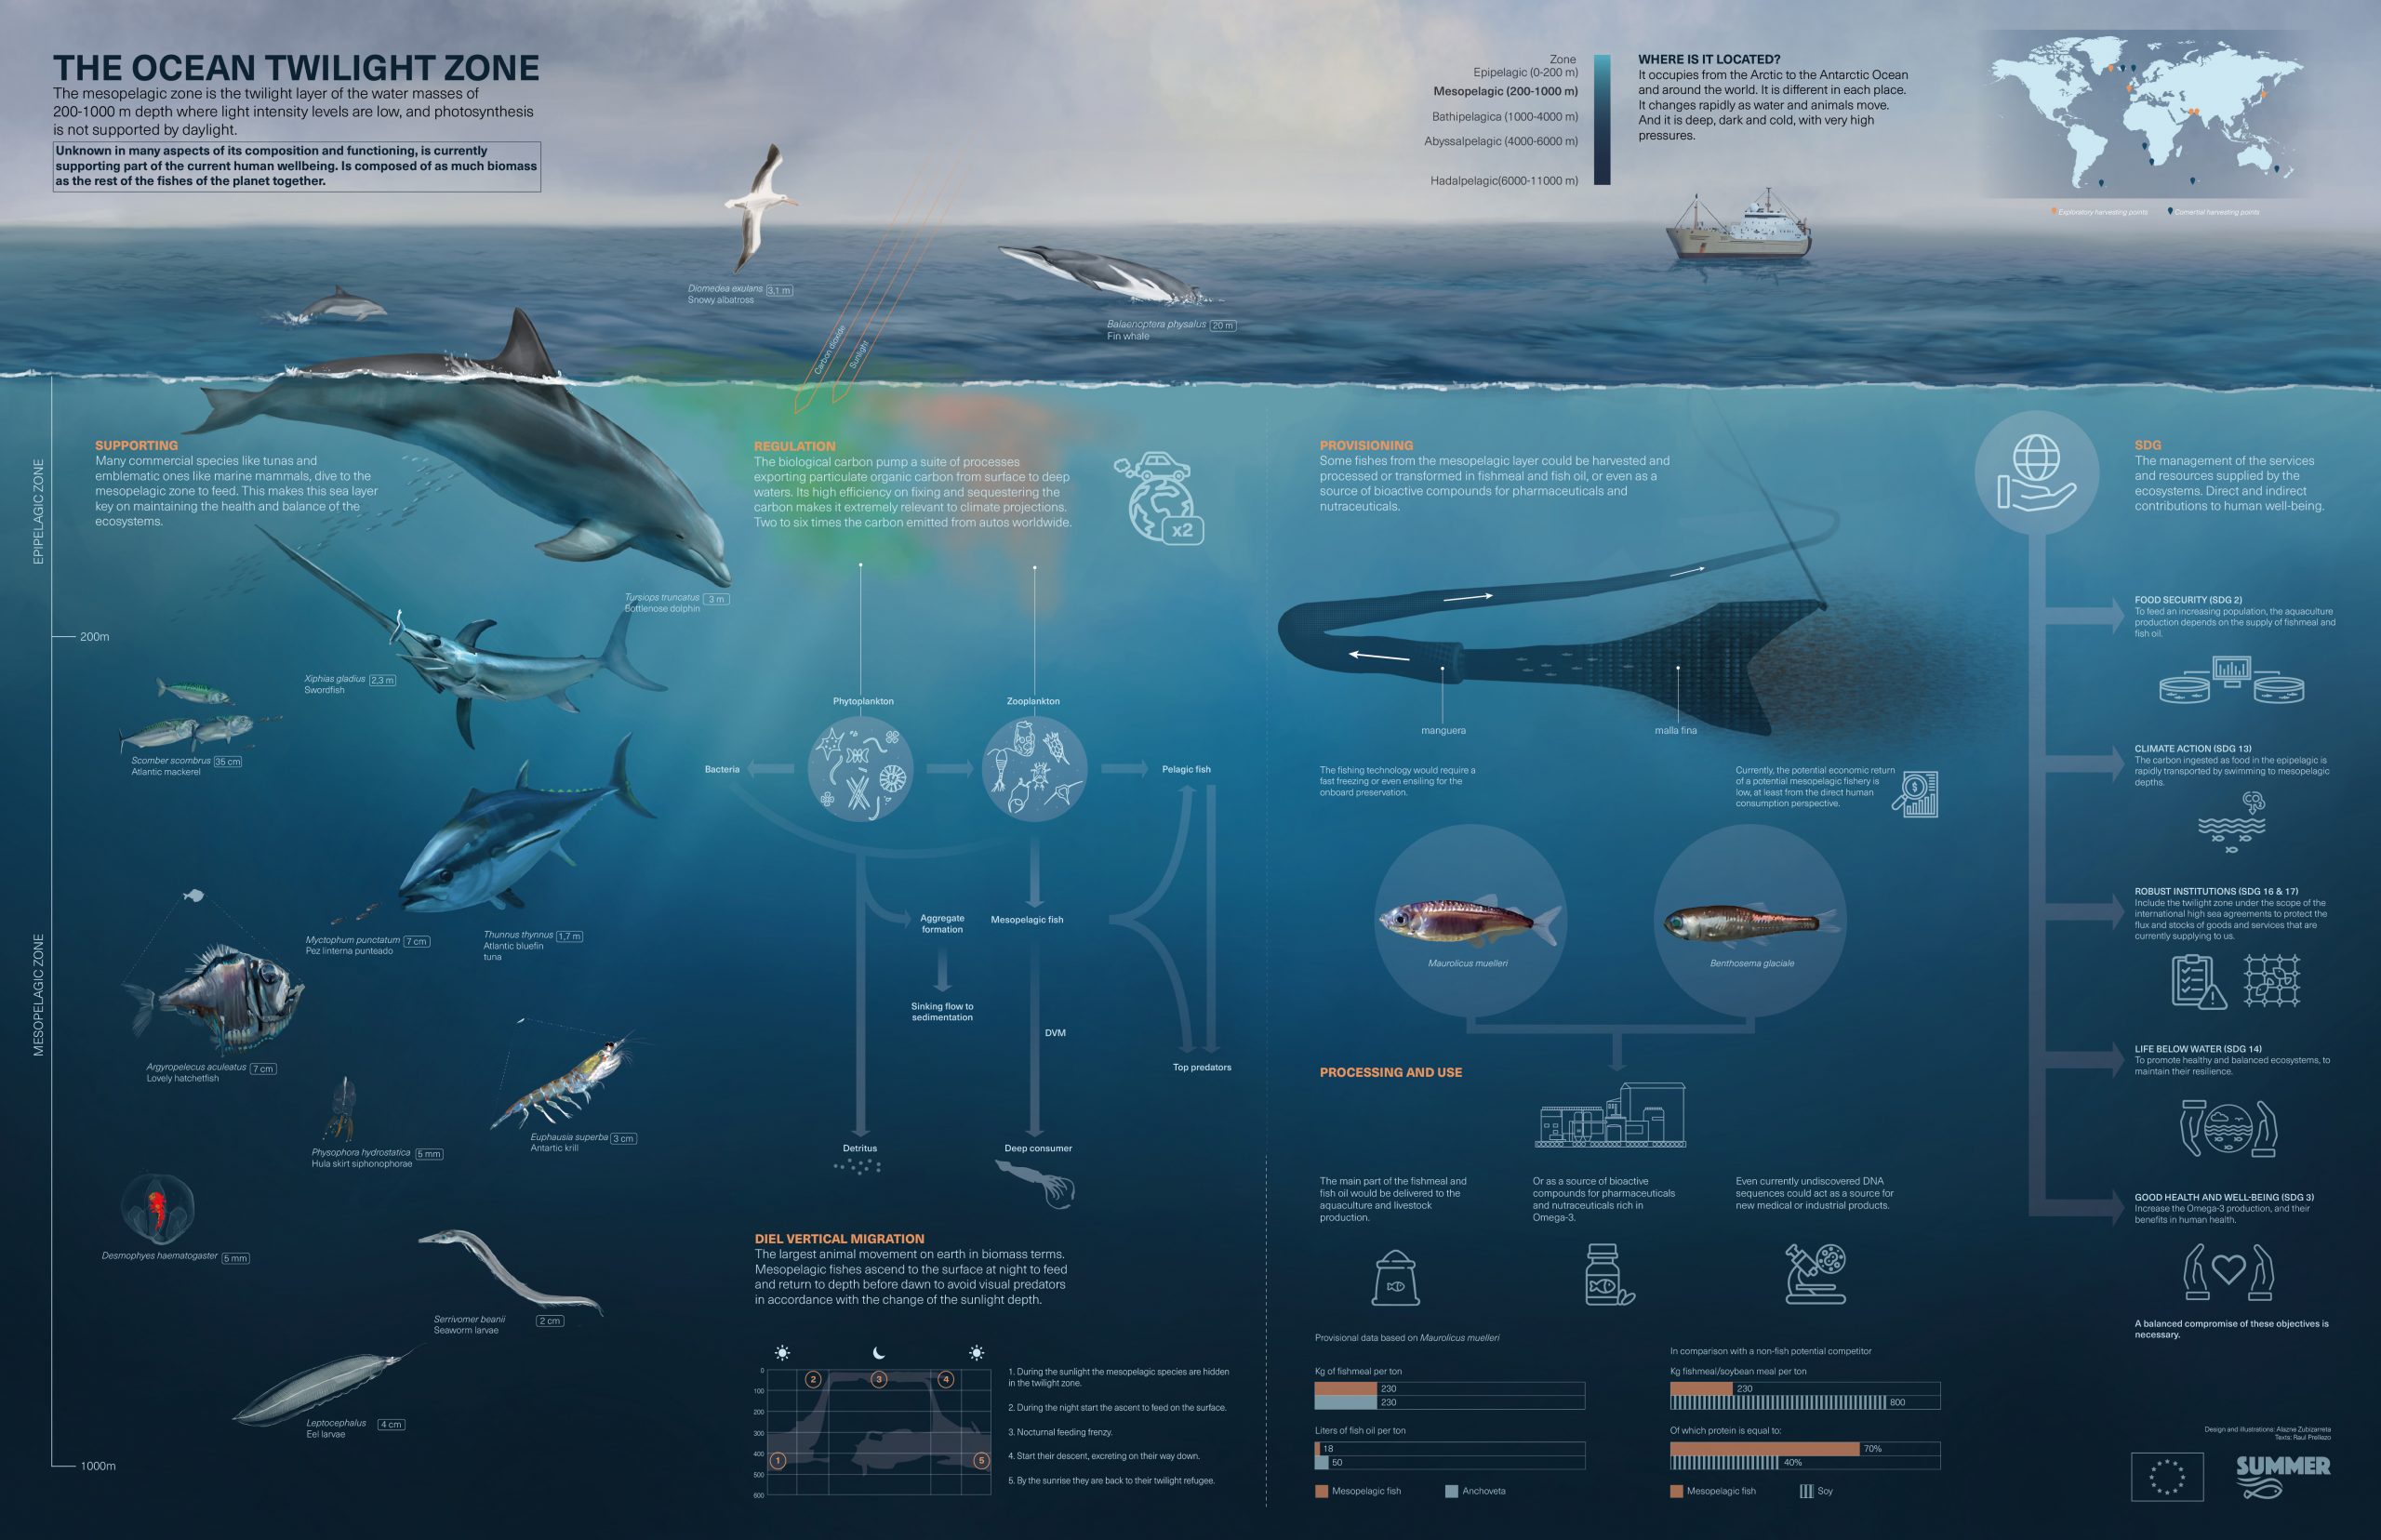 Infographic on the ocean twilight zone